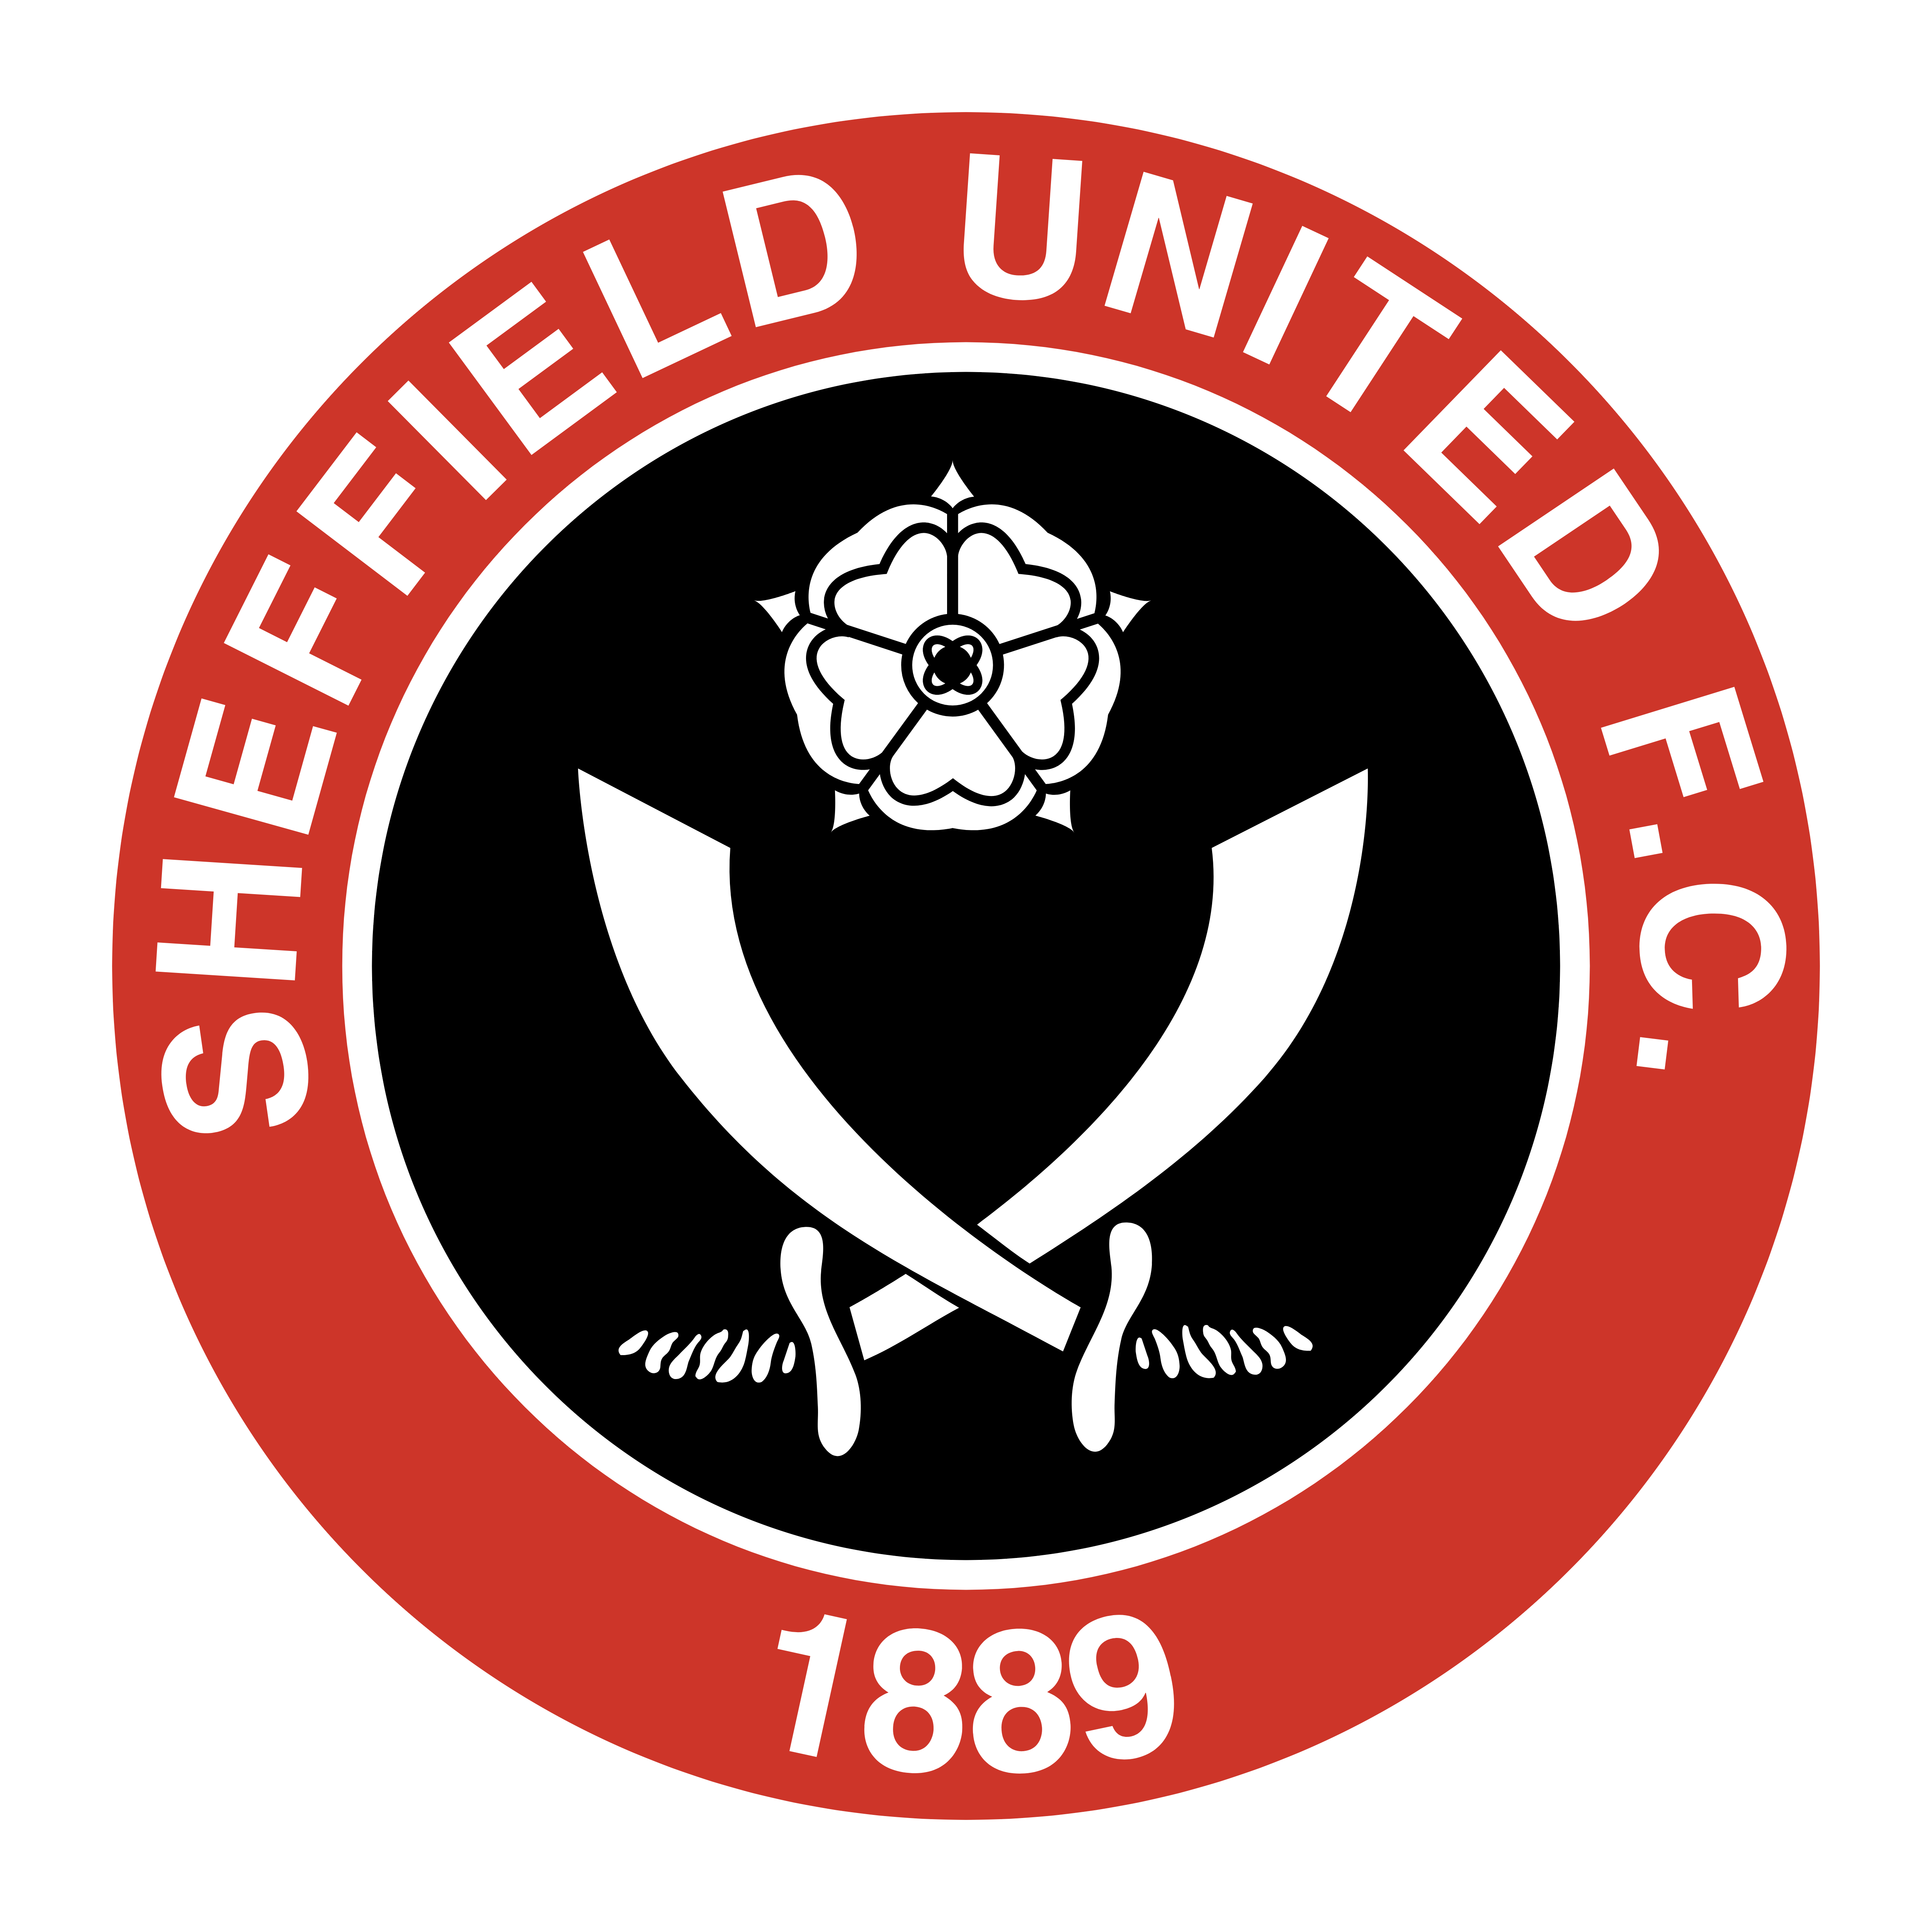 Sheffield United Fc Logos Download